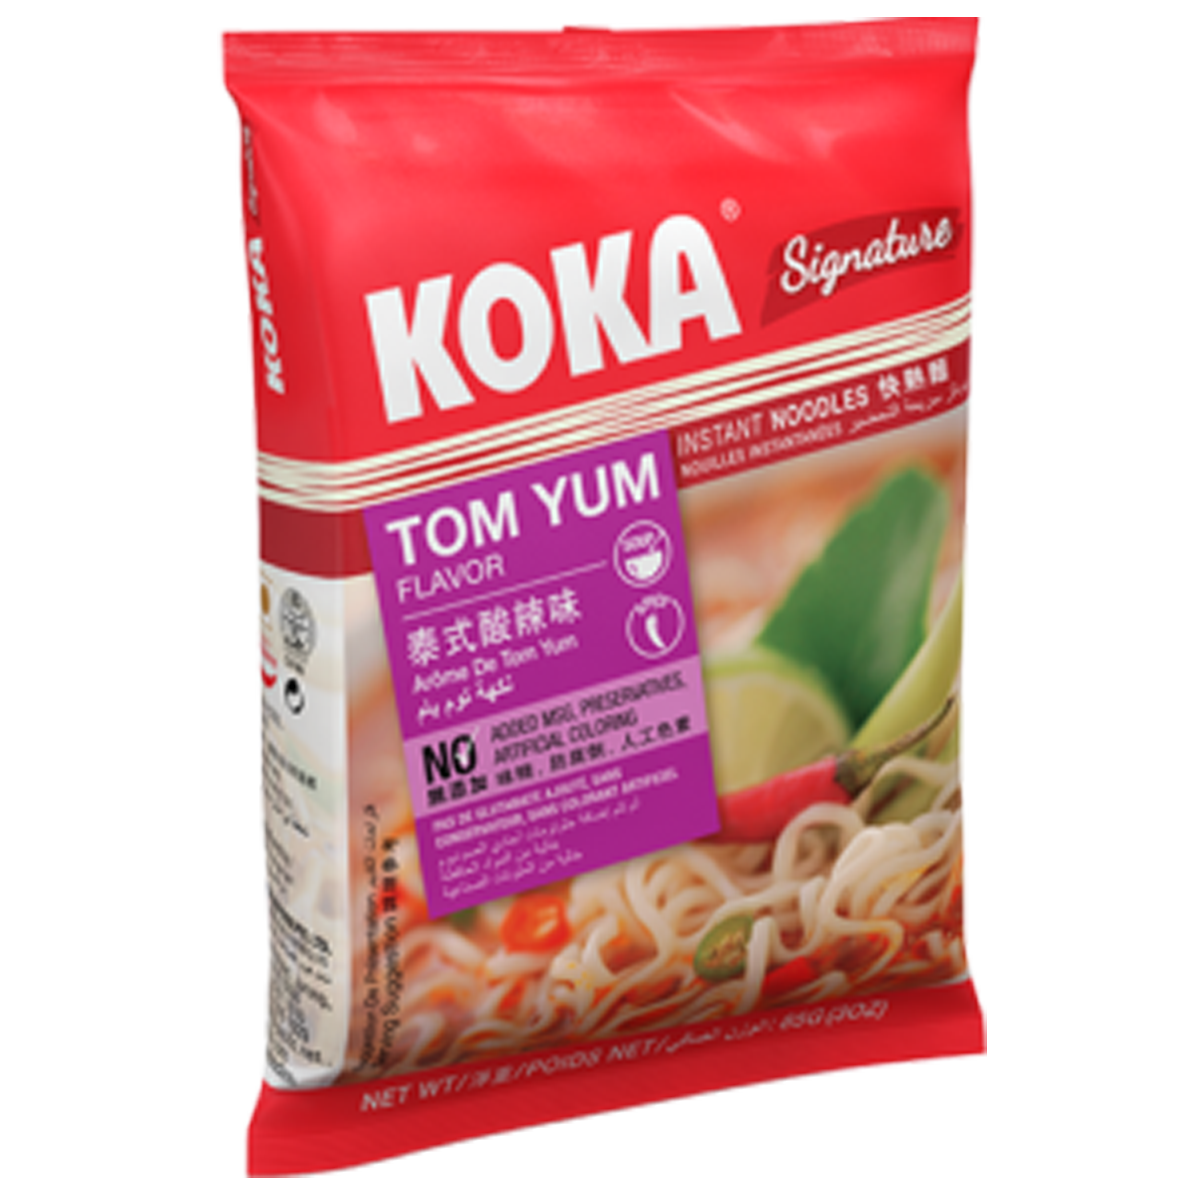 Koka Signature TomYum Flavor 85g